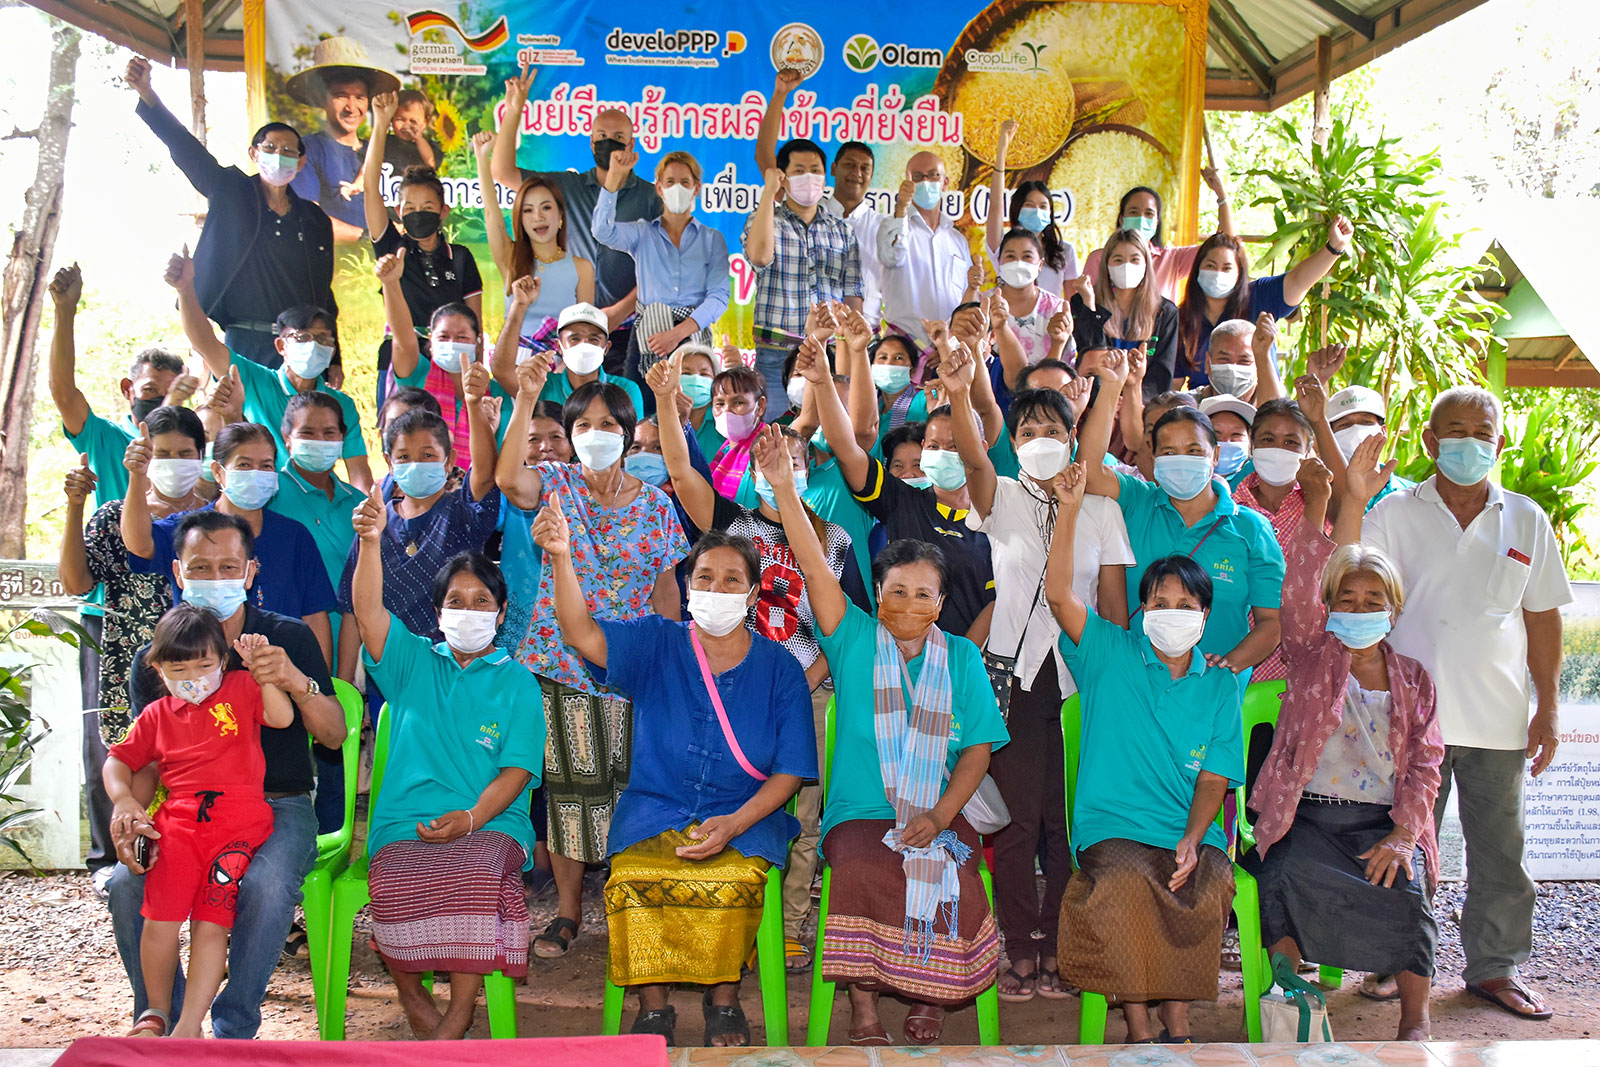 Group photo of MSVC members and representatives from Rice Department, National Bureau of Agricultural Commodity and Food Standards, Olam Agri and GIZ Thailand at Suan Ta Rom Sustainable Agriculture Learning Centre, Ubon Ratchathani. ( เกษตรกรและคณะเจ้าหน้าที่โครงการ MSVC Thailand ถ่ายภาพร่วมกันเป็นที่ระลึก ที่ศูนย์การเรียนรู้การผลิตข้าวที่ยั่งยืน สวนตารมย์ บ้านดอนหมู ตำบลขามเปี้ย อำเภอตระการพืชผล จังหวัดอุบลราชธานี)